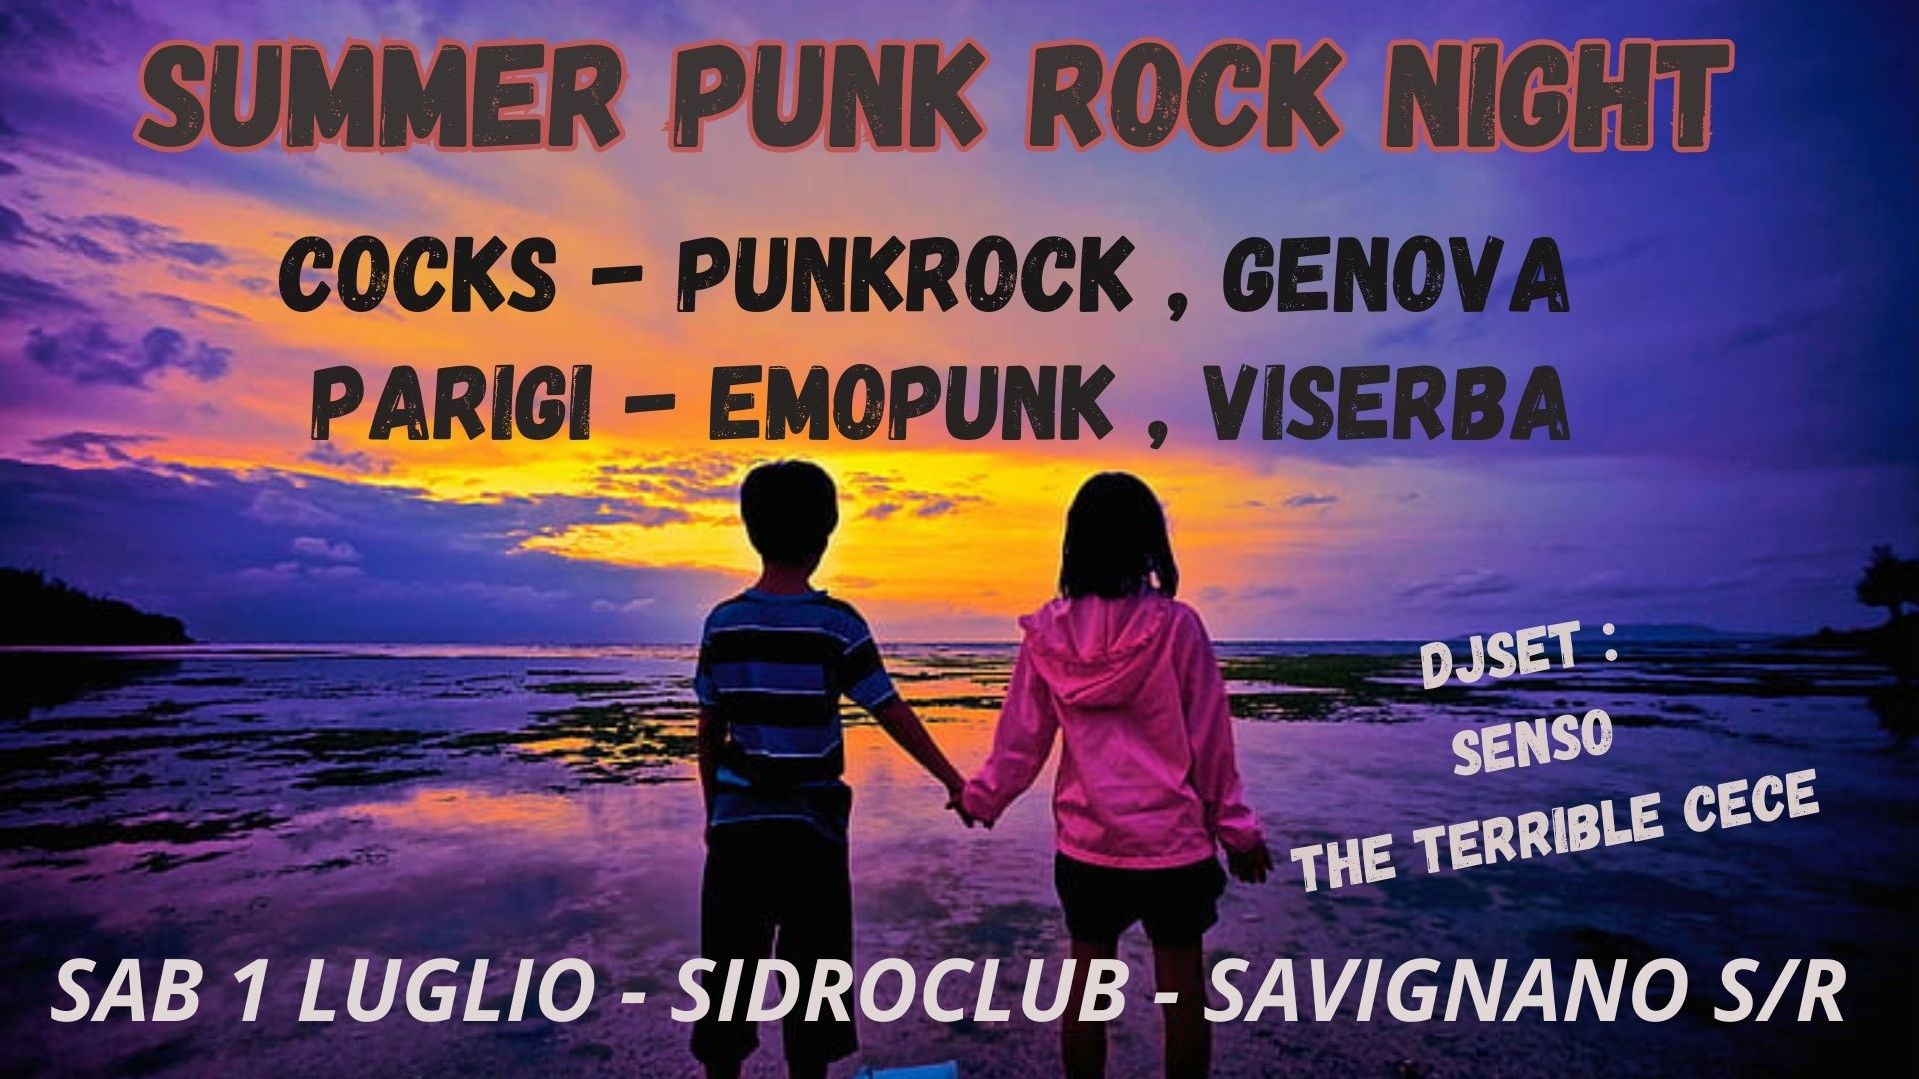 Summer Punk Rock Night
-> Cocks + Parigi -> Dj Senso & Terrible Cece